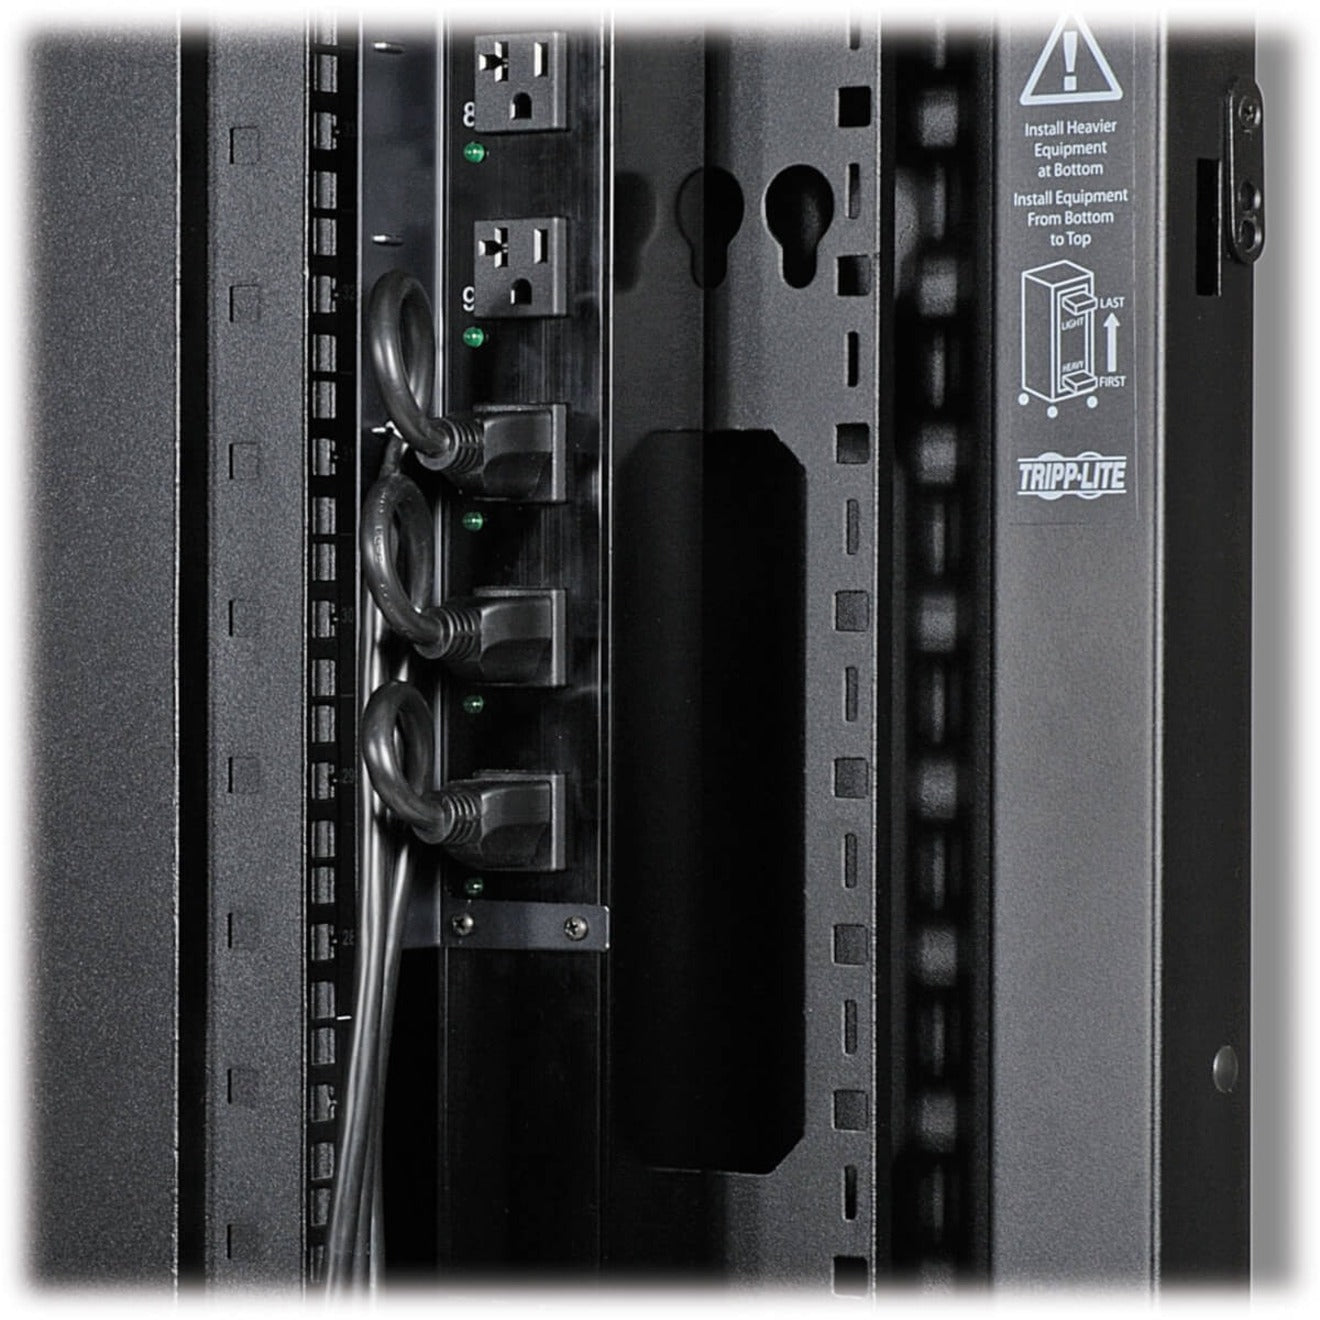 Tripp Lite SR52UBDP 52U Server Rack, Casters, Cable Management, Reversible Door